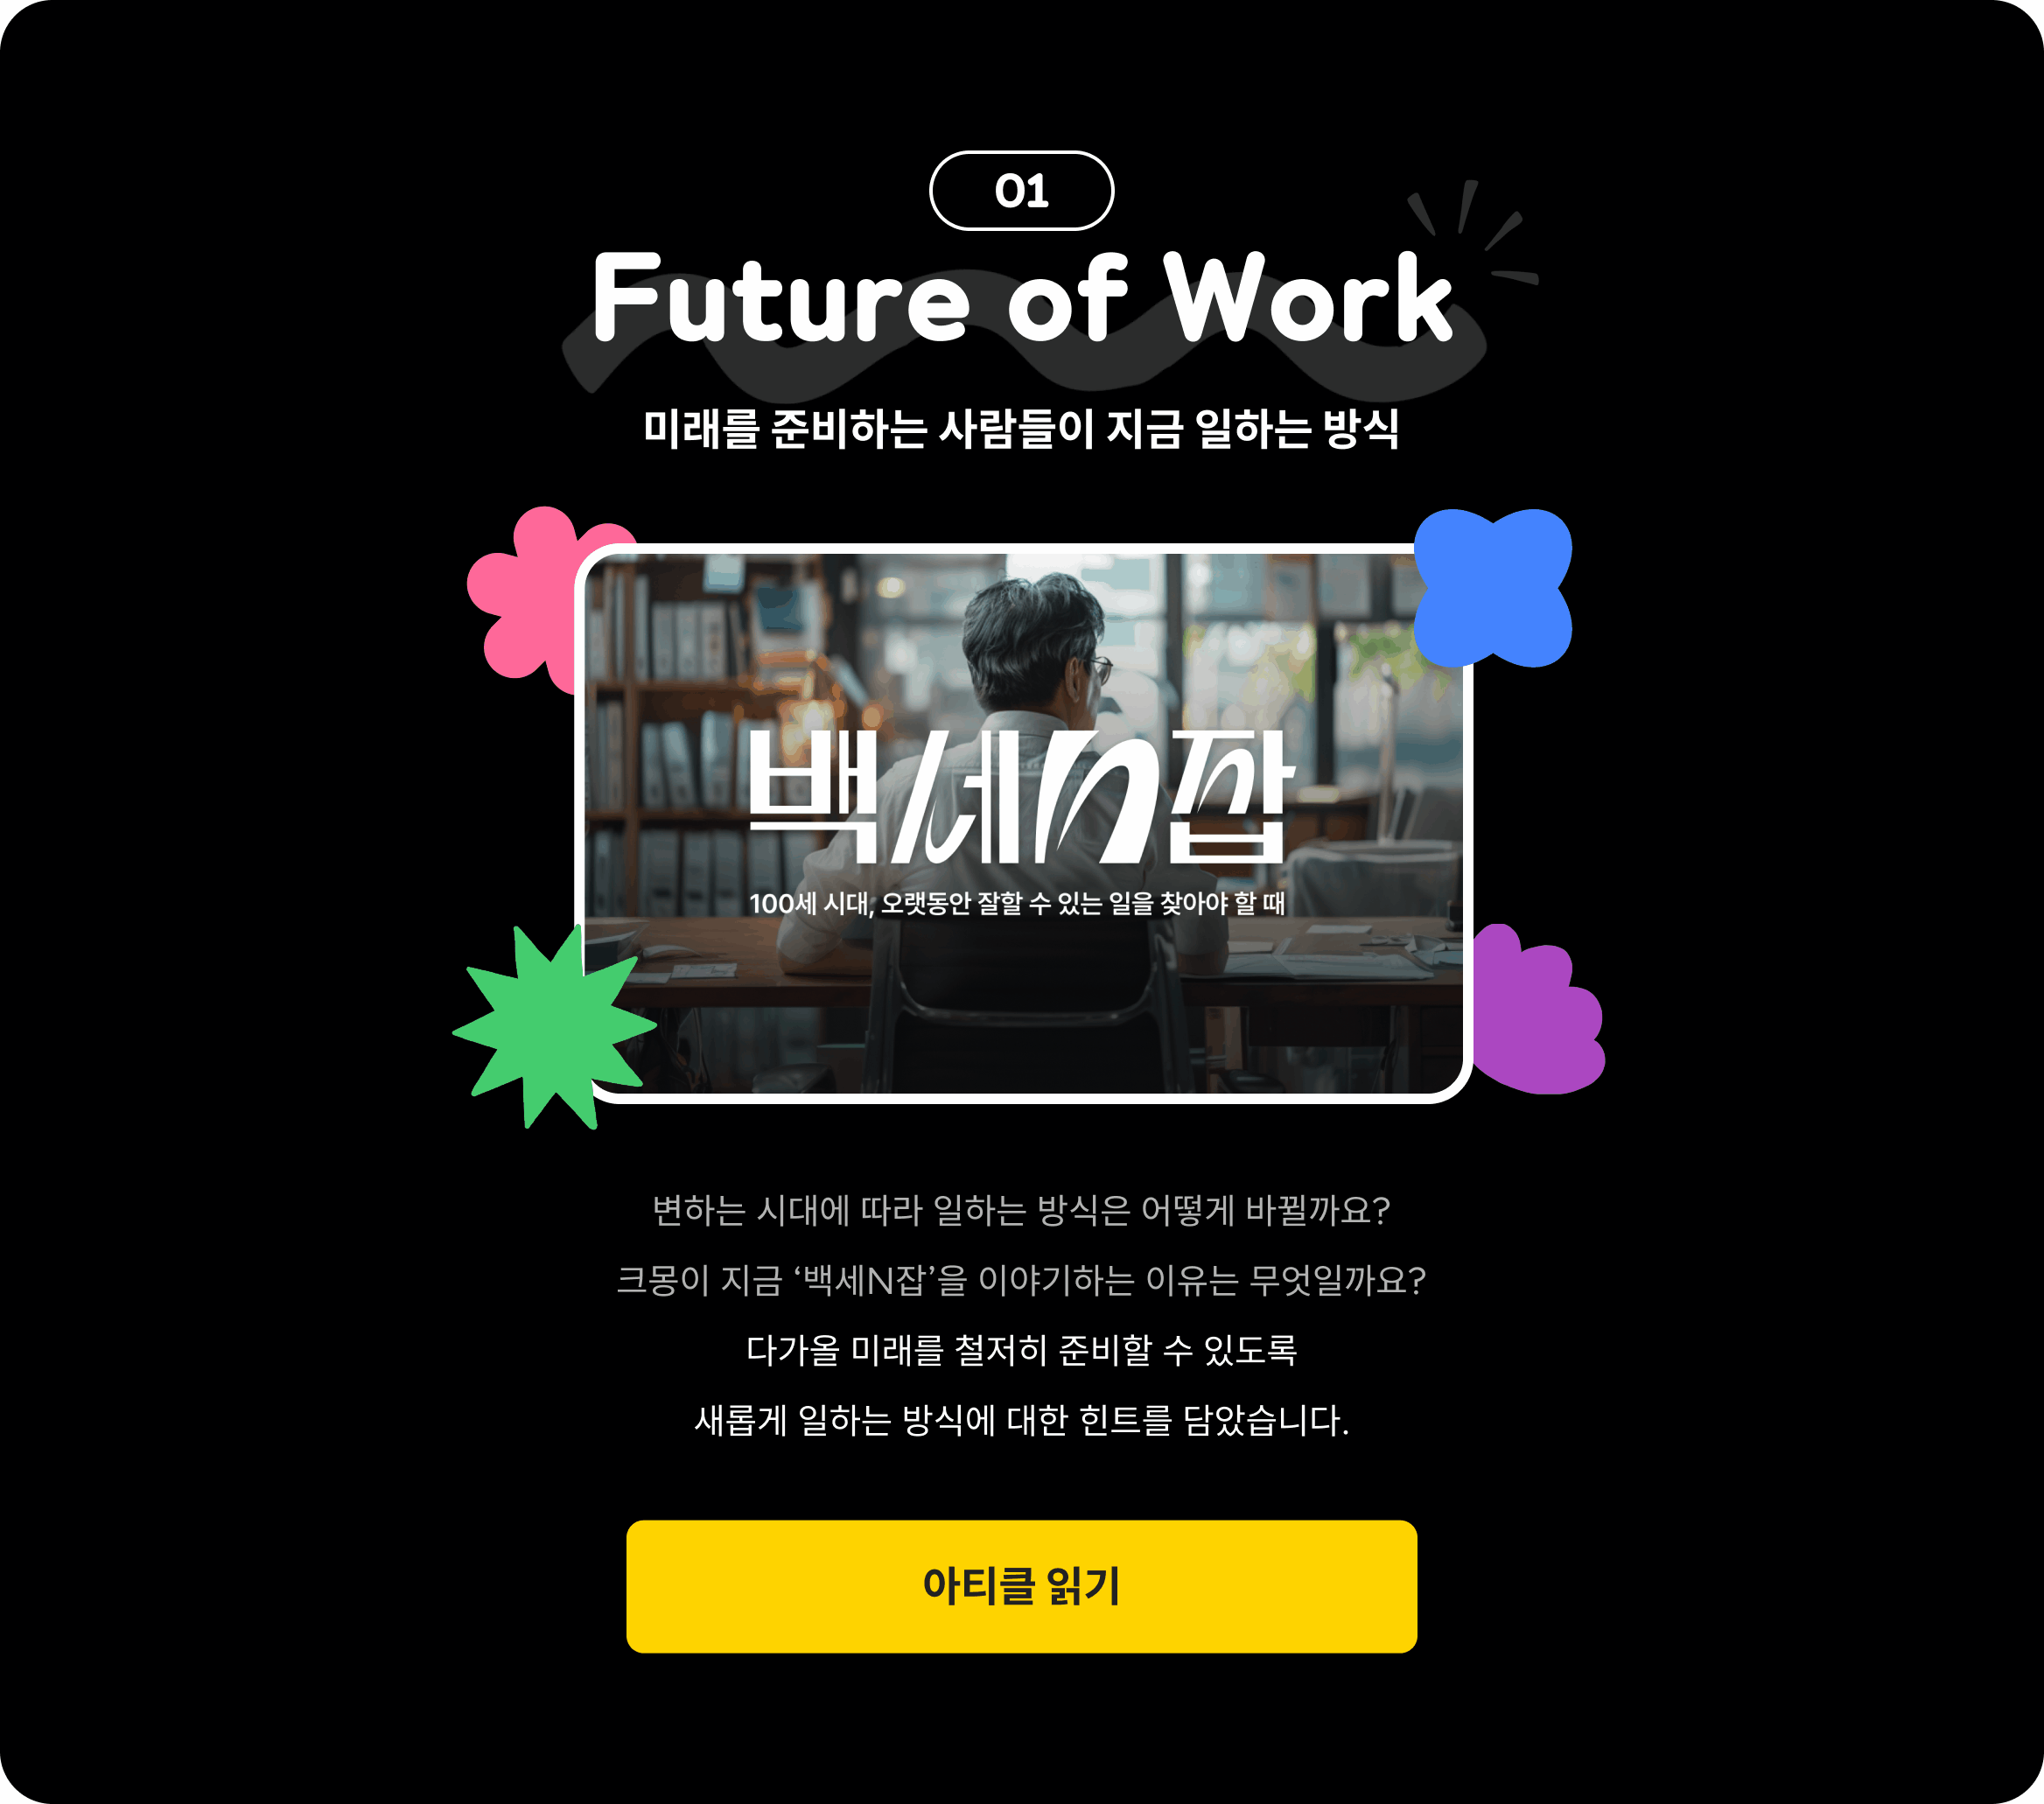 6. Future of Work 아티클에 대한 설명